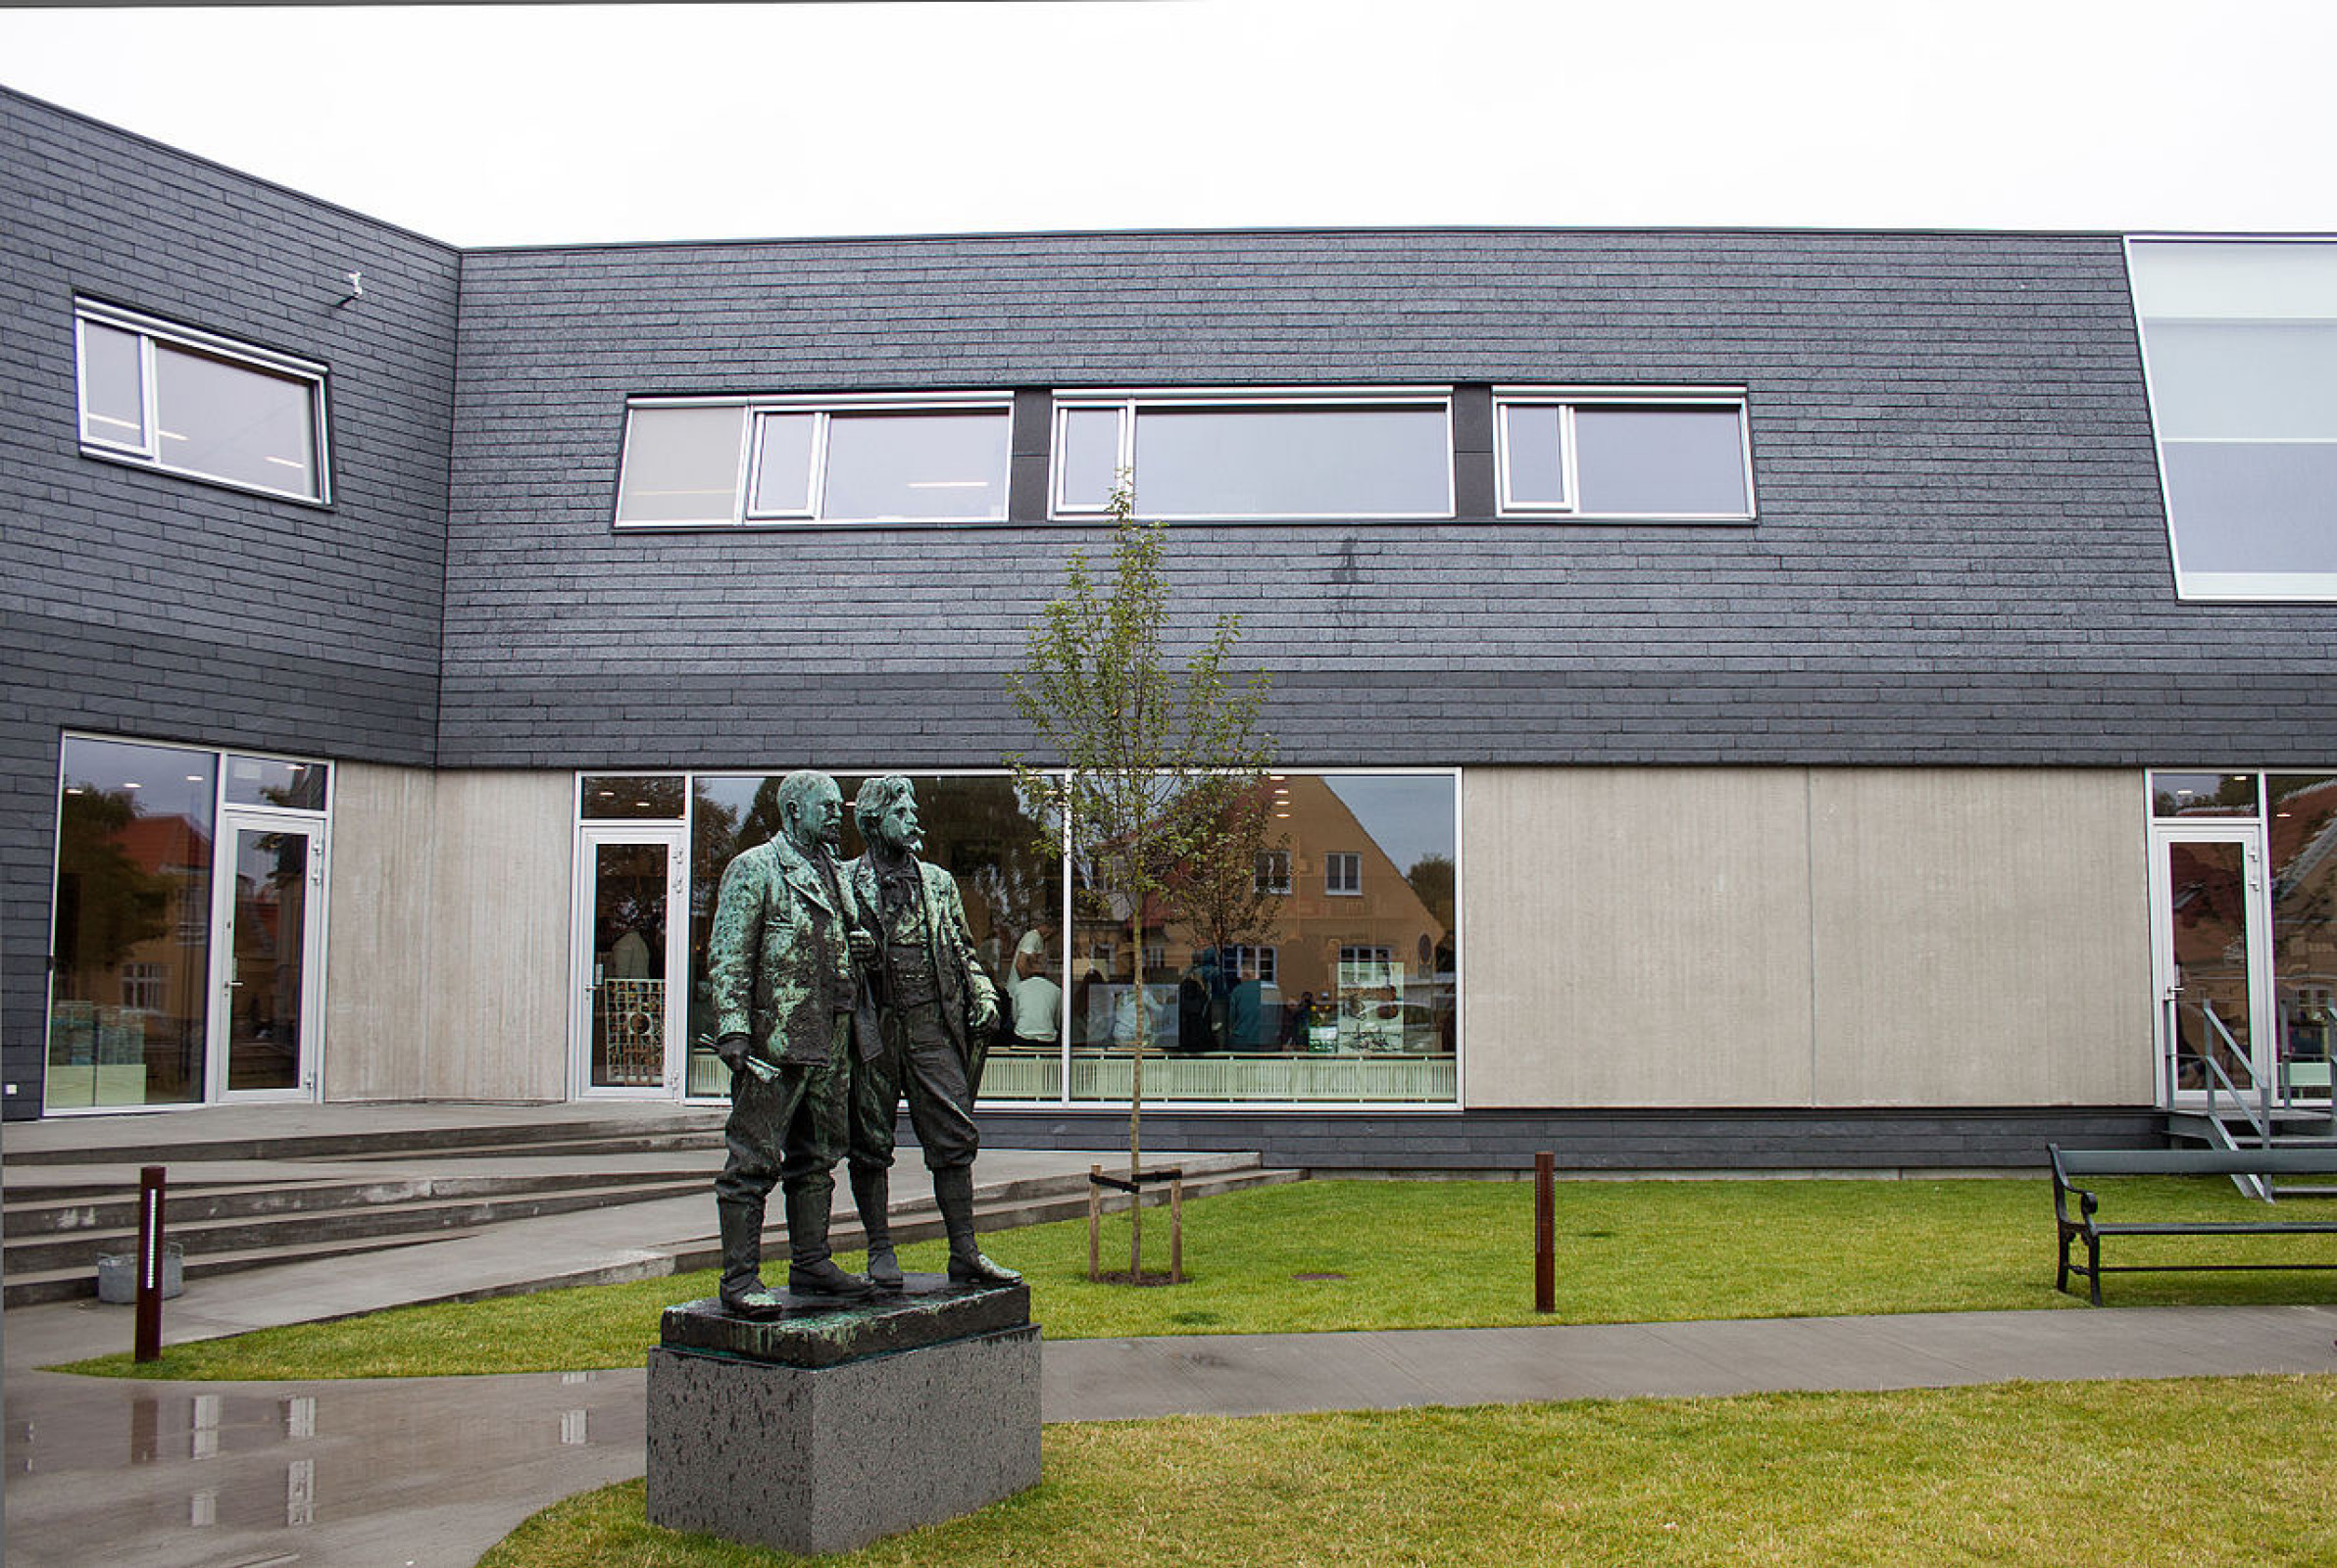 Habitat Almægtig huh Museum Skagens - Museums | Arthive